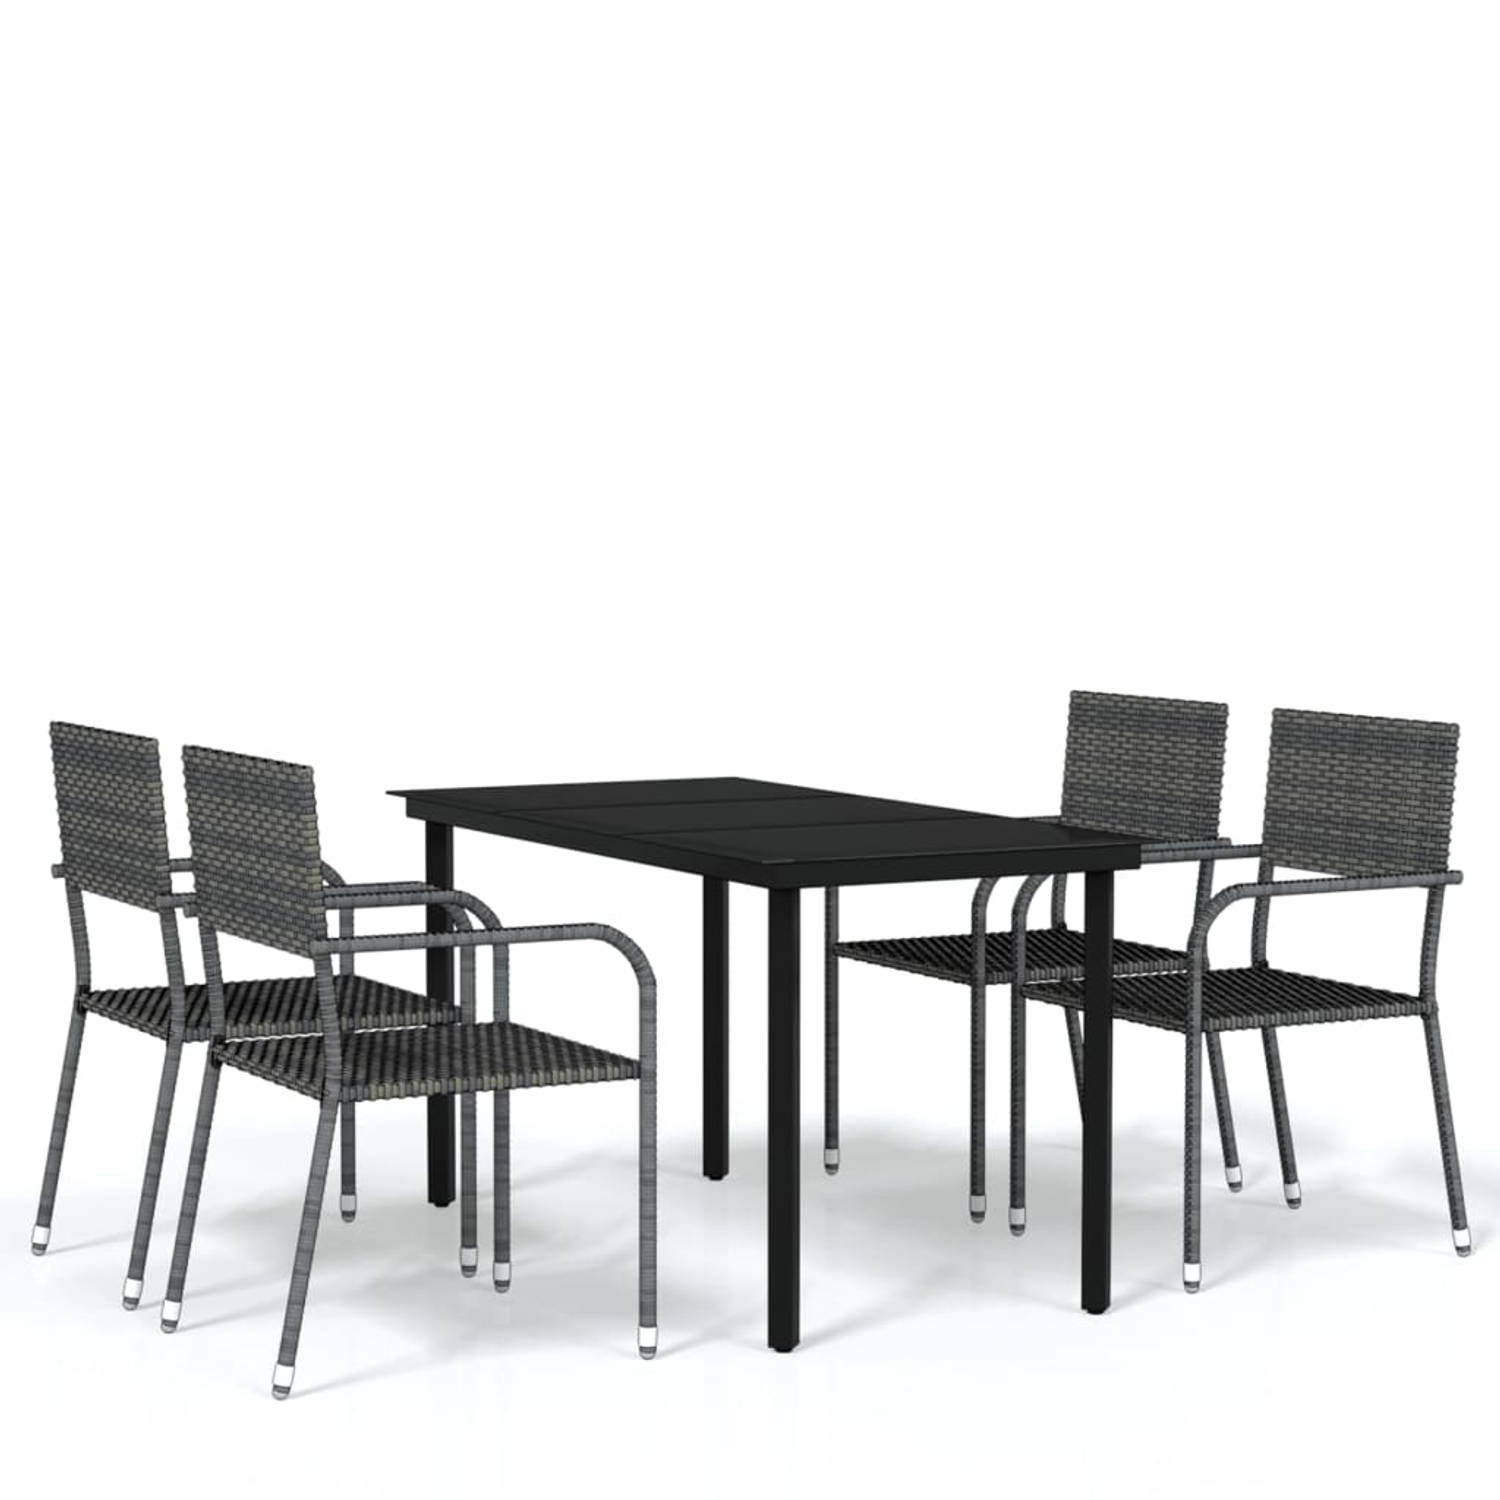 The Living Store Tuinset - naam - Buiteneetset - 140 x 70 x 74 cm - Stalen frame - PE-rattan - Zwart-grijs - Stapelbare stoelen